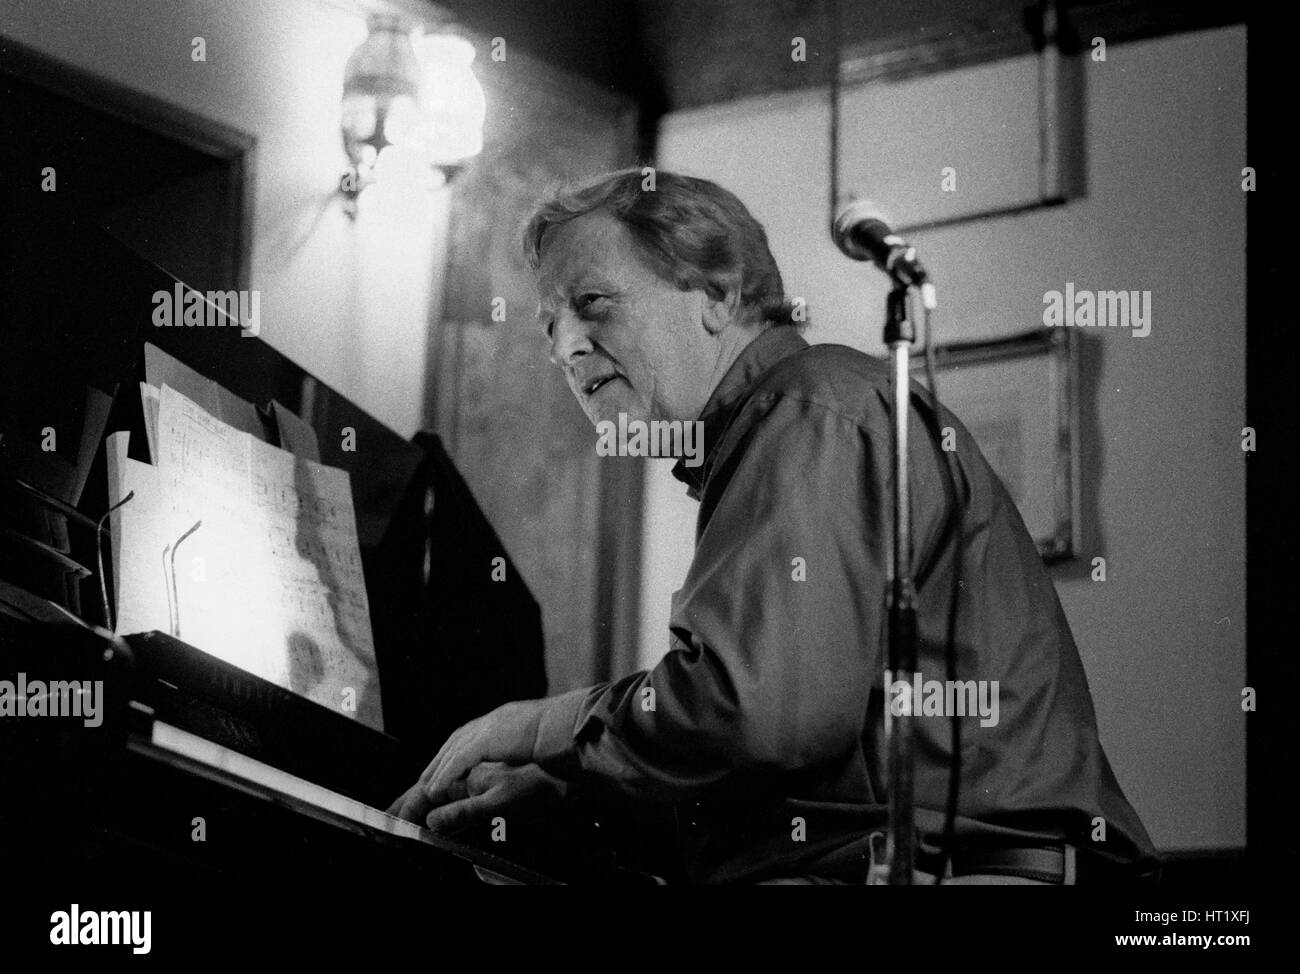 Brian Dee, Watermill Jazz Club, Dorking, Surrey, June 2000. Artist: Brian O'Connor. Stock Photo